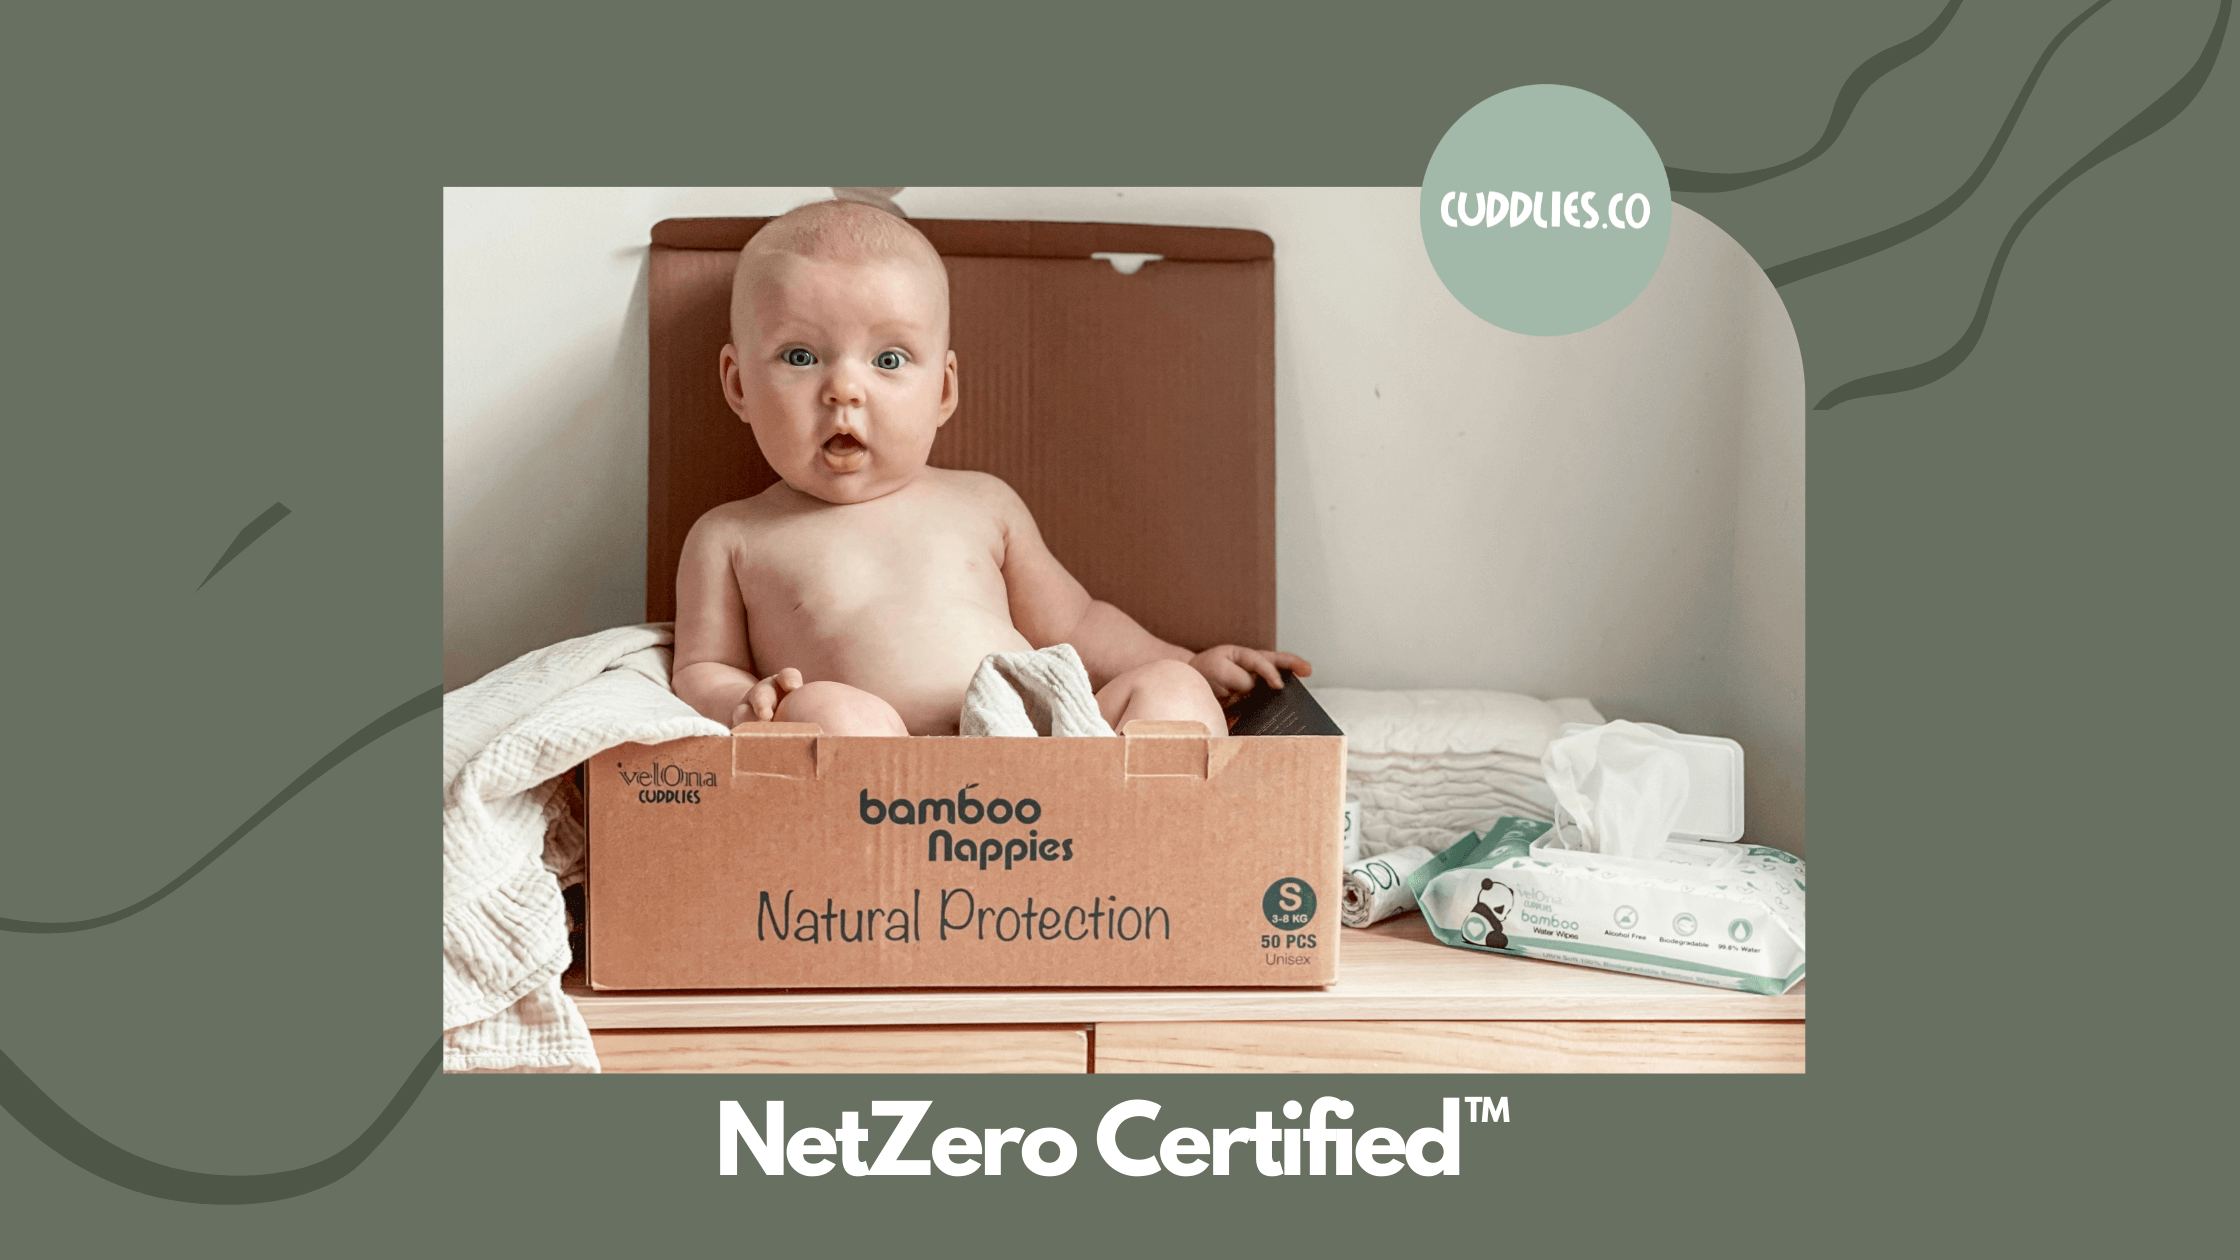 Cuddlies Bamboo Nappies & Water Wipes achieve NetZero certification